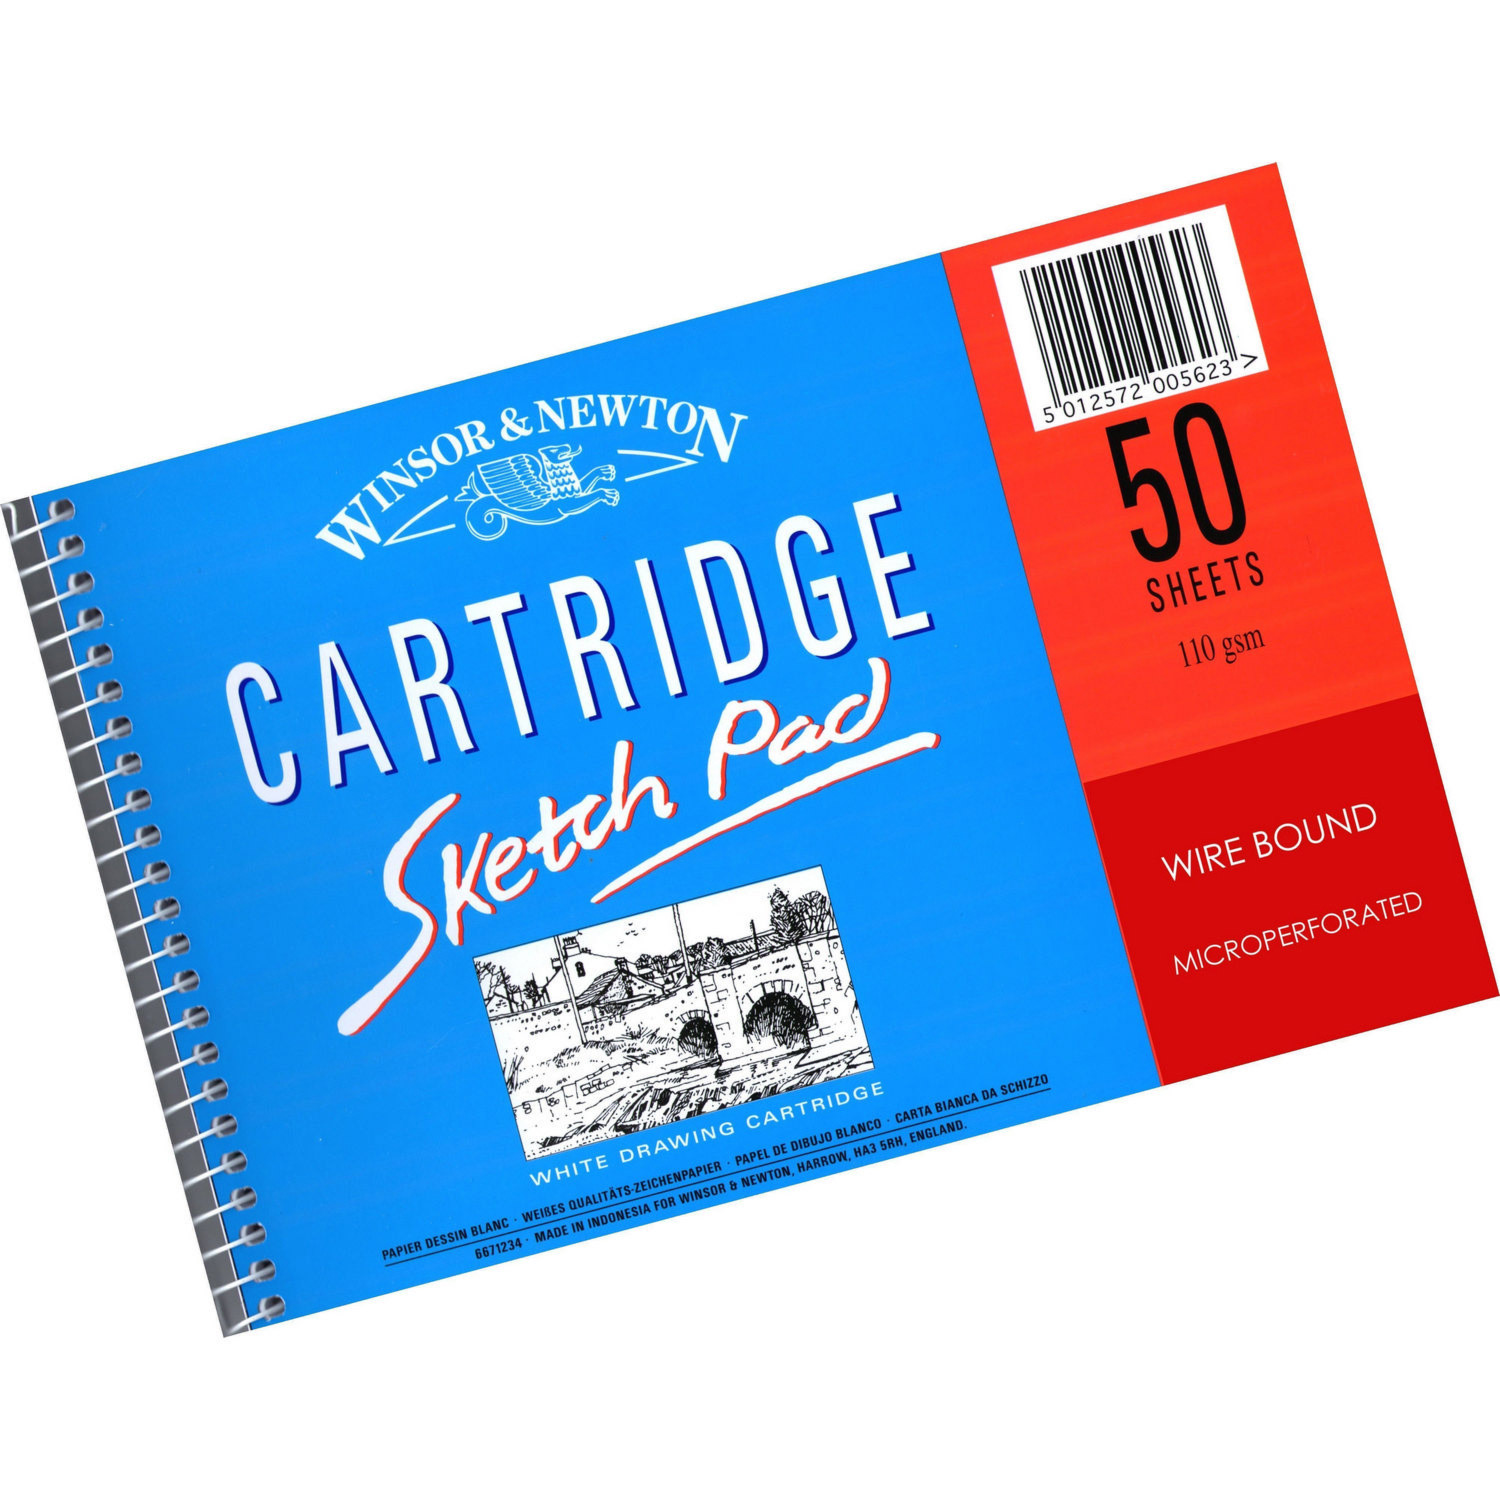 Winsor and Newton Cartridge 50 Sheet Sketch Pad - A3 Image